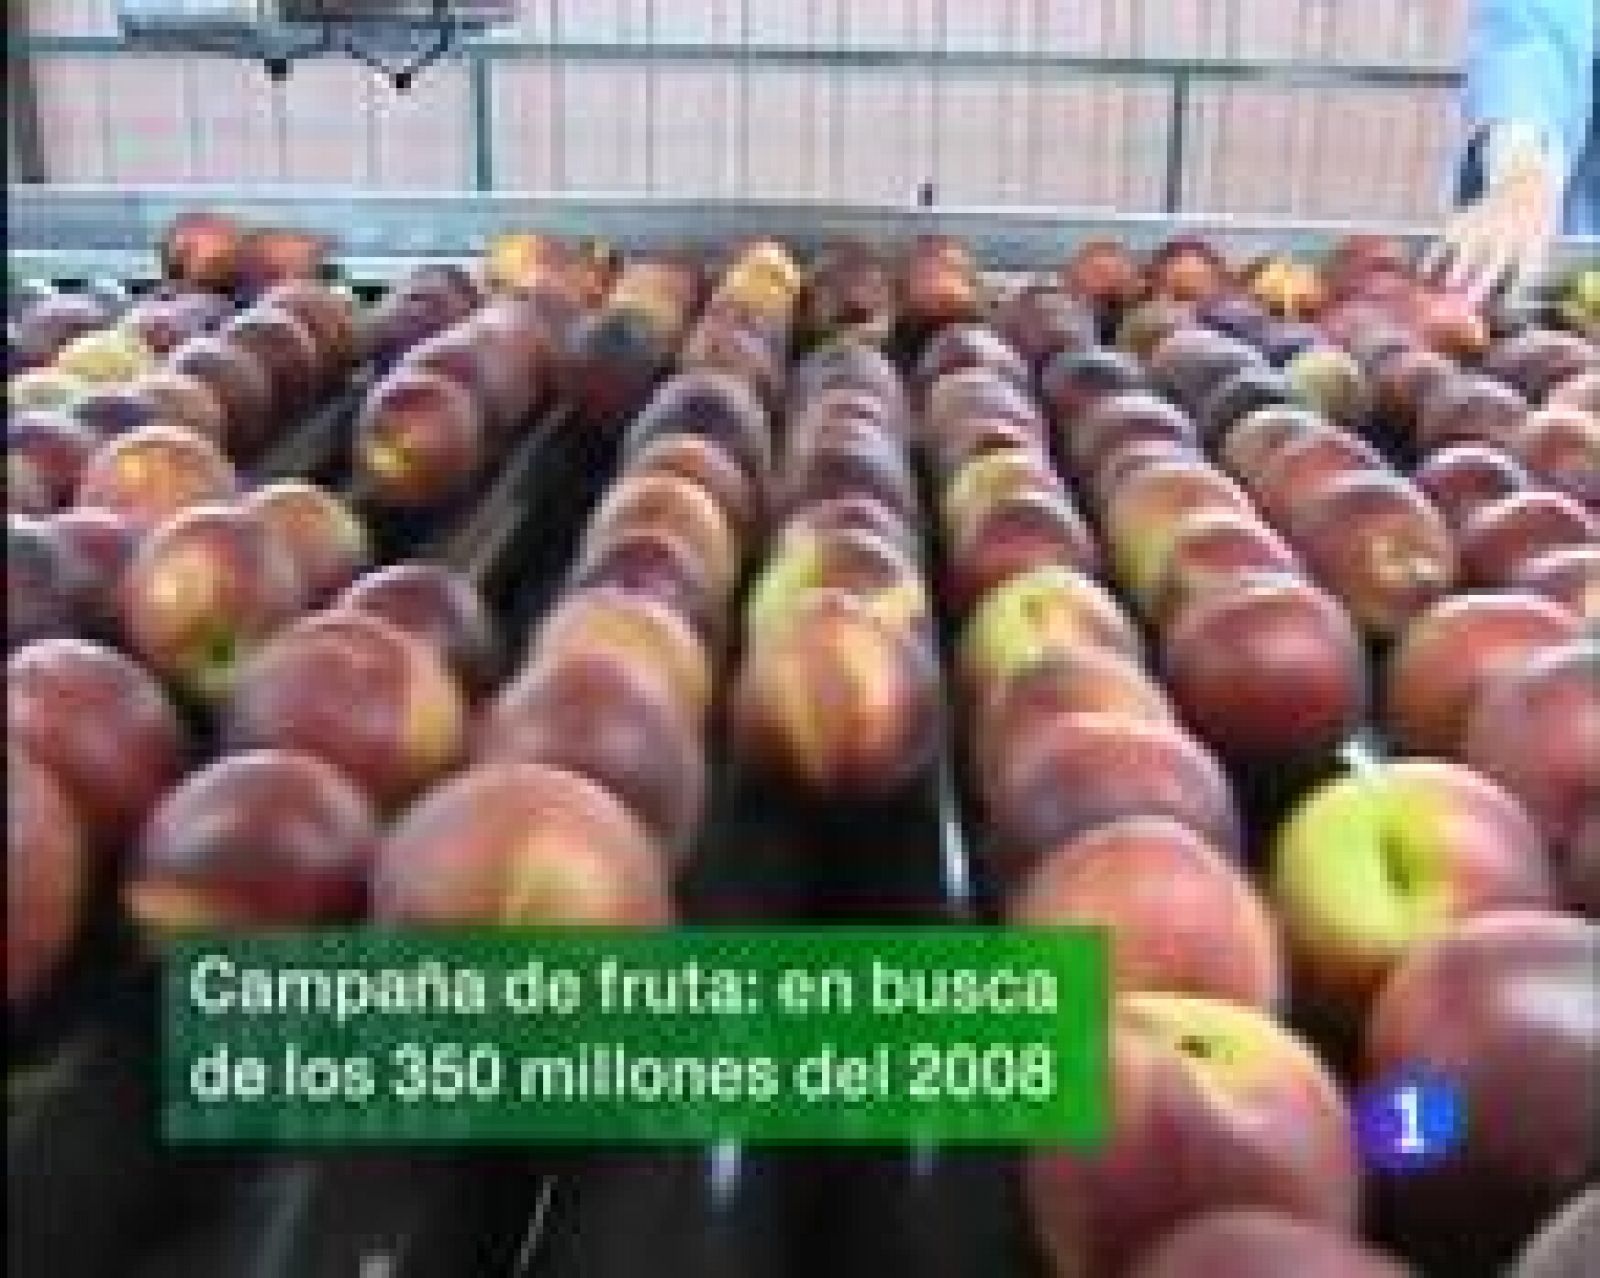 Noticias de Extremadura: Noticias de Extremadura - 11/06/09 | RTVE Play